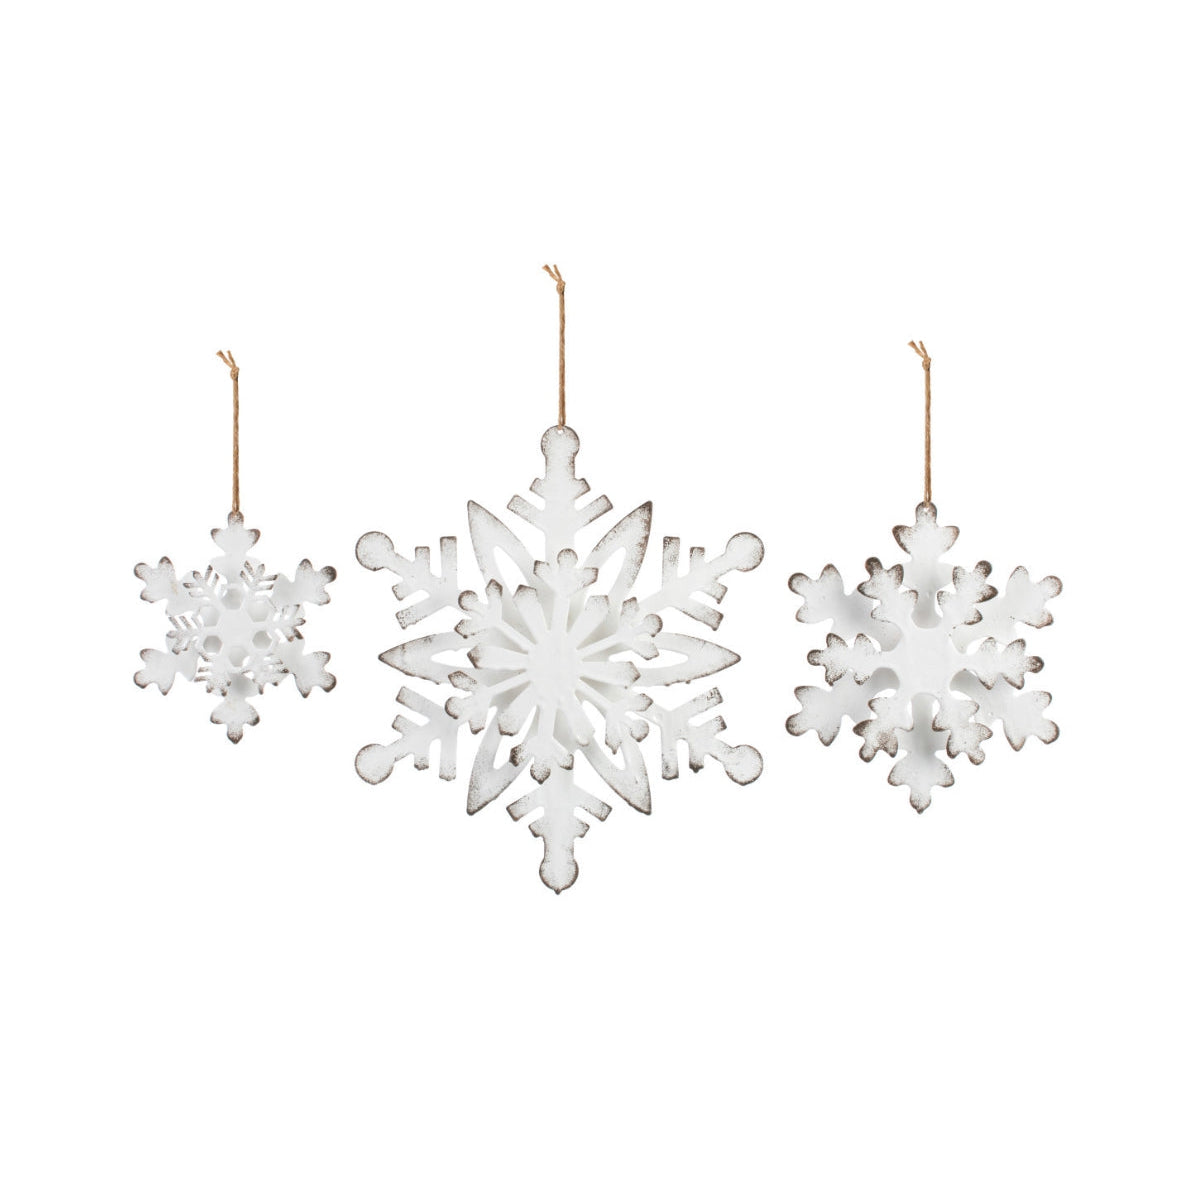 Oversized Metal Snowflake Ornaments